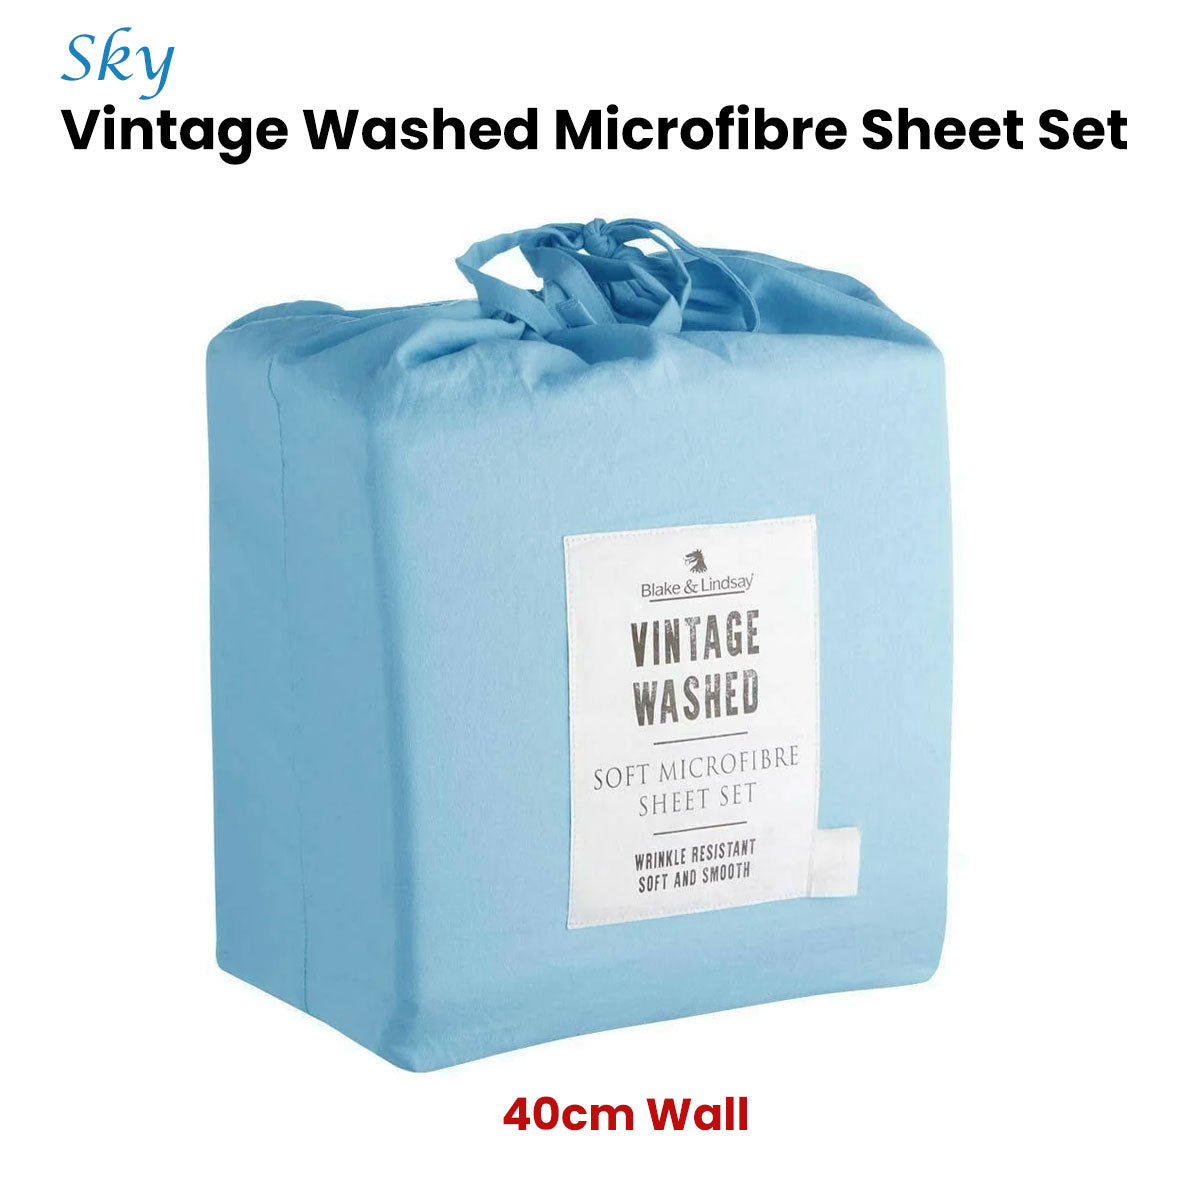 Blake & Lindsay Sky Vintage Washed Microfibre Sheet Set 40cm Wall Single